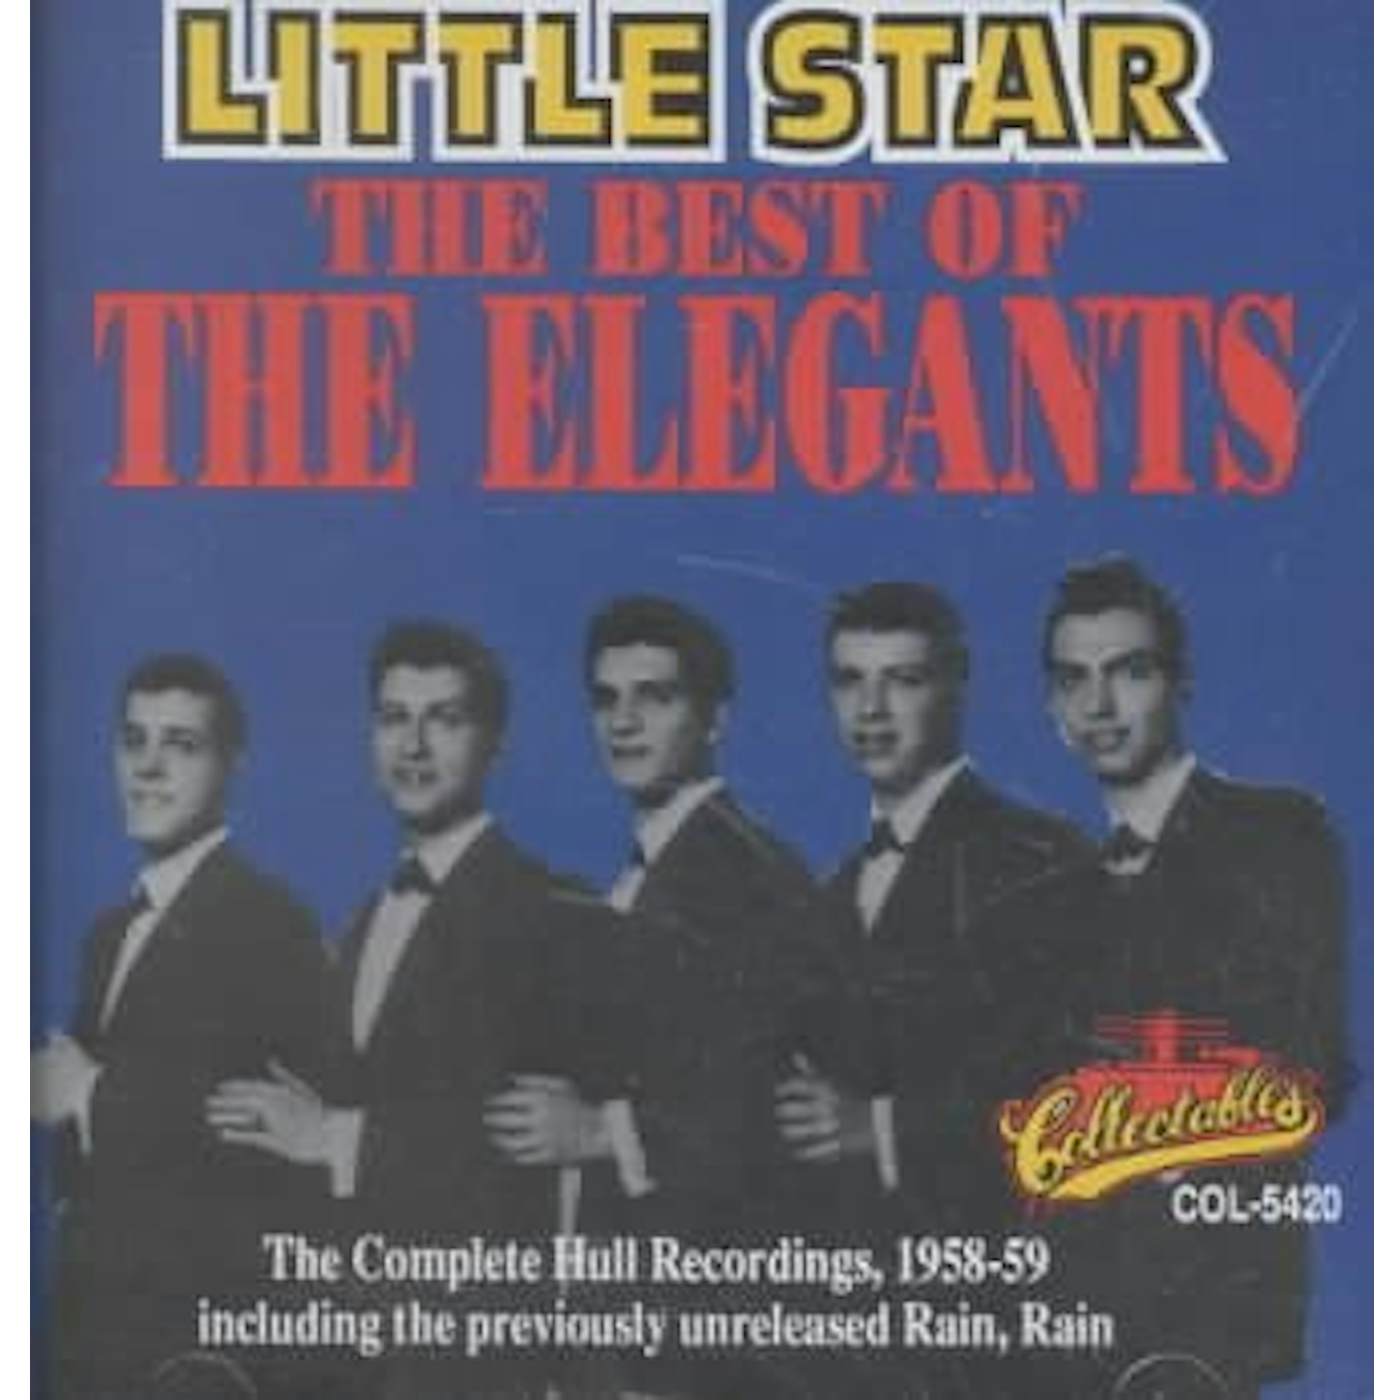 Best of the Elegants CD